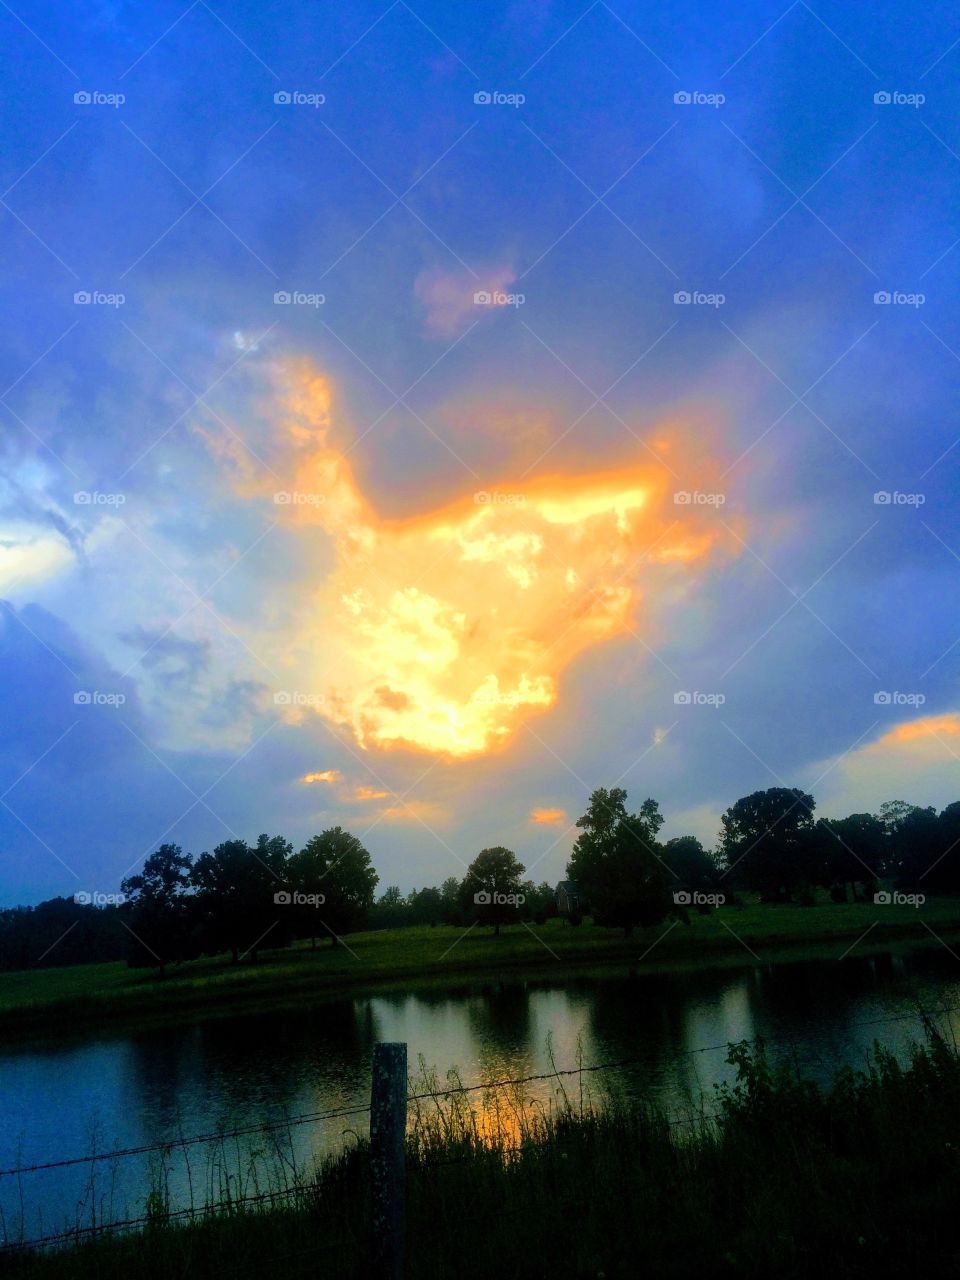 Sunset burst with pond reflection